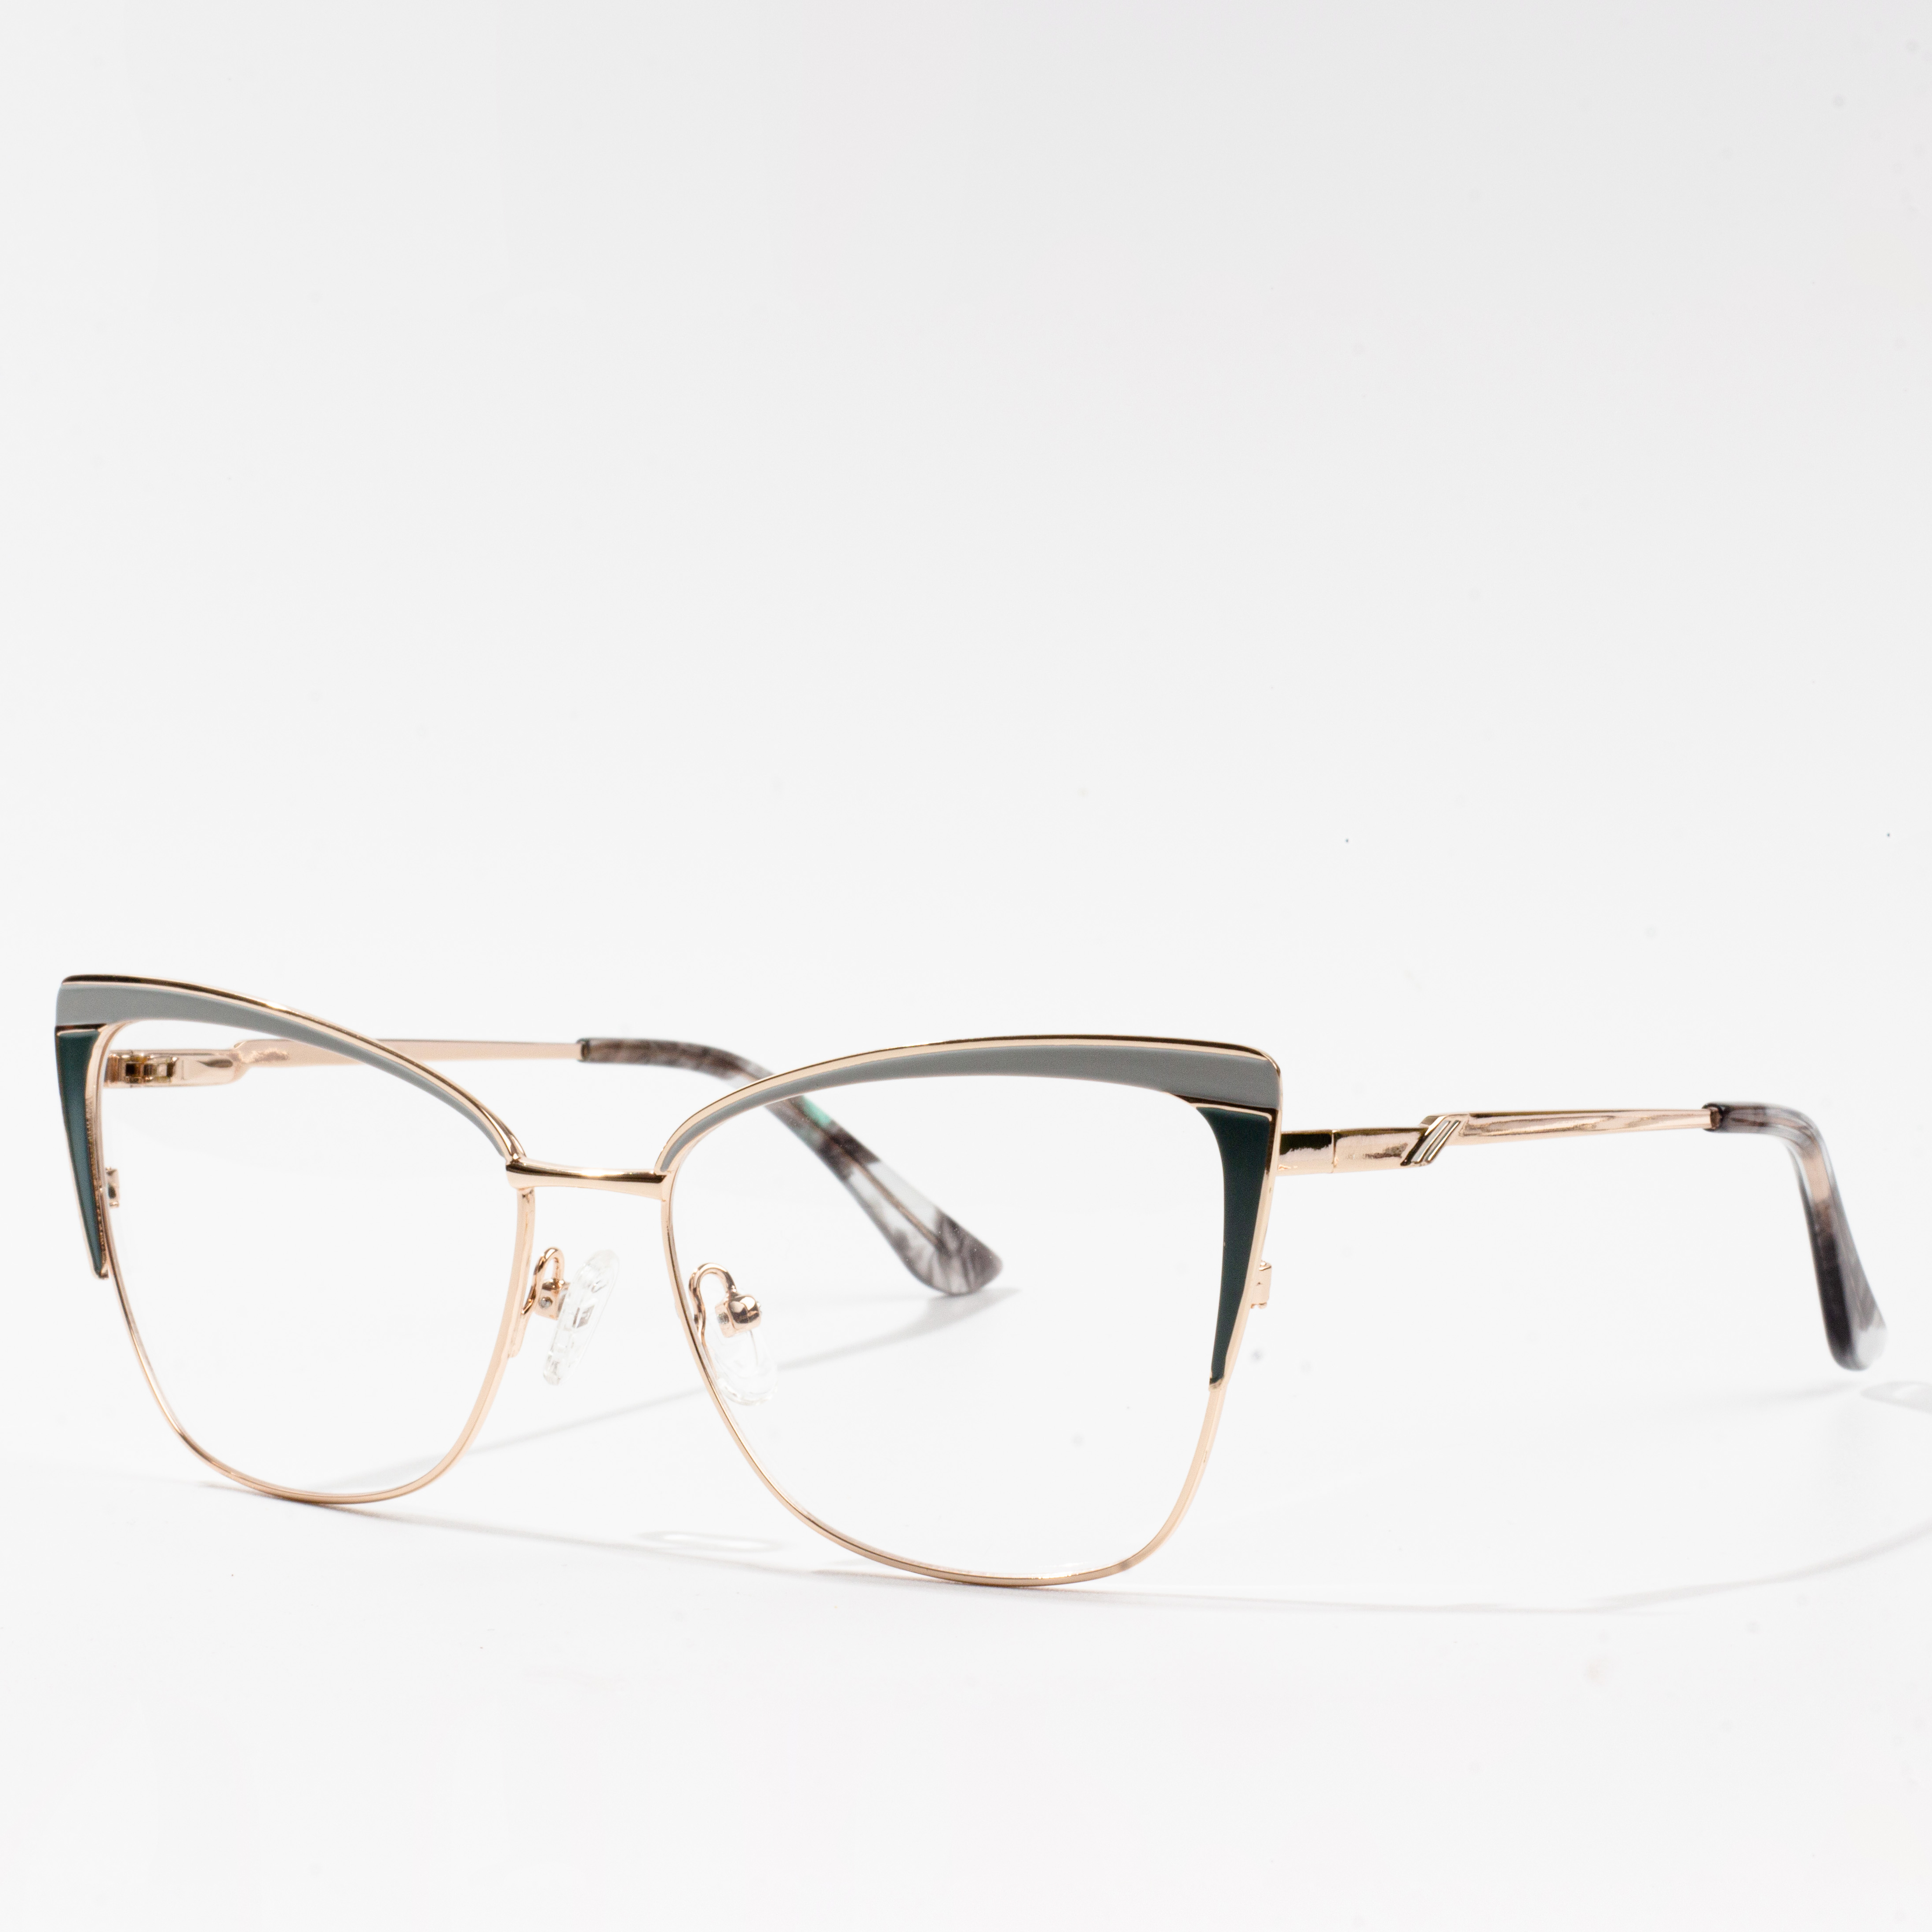 diversi tipi di montature per occhiali